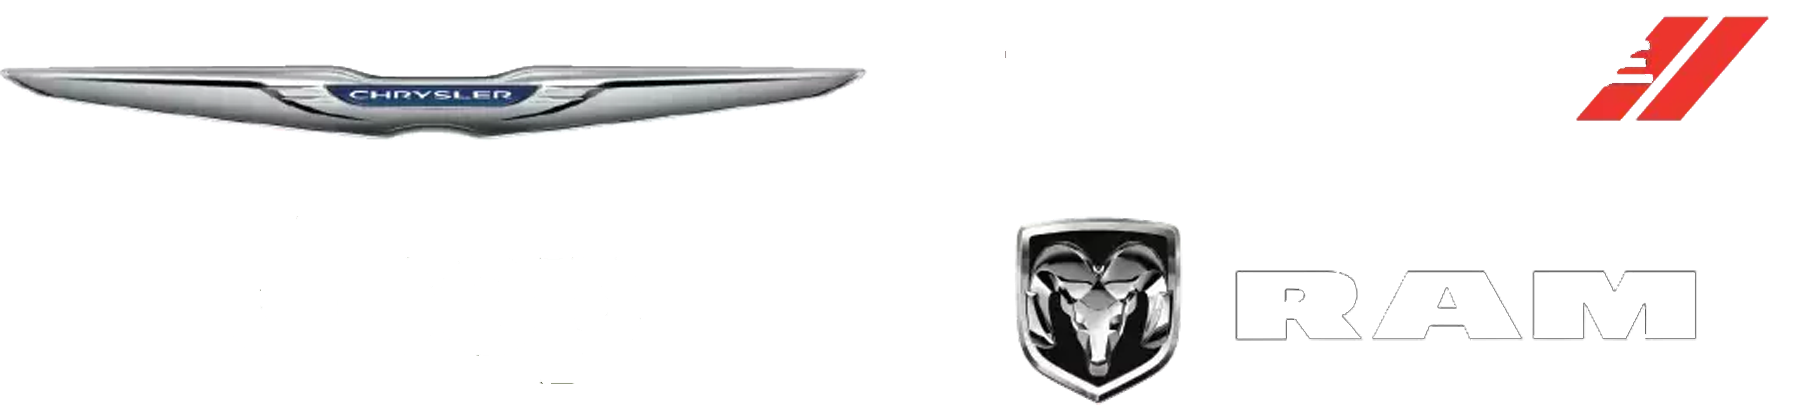 Patriot CDJR of Chandler-shopper-assurance-logo